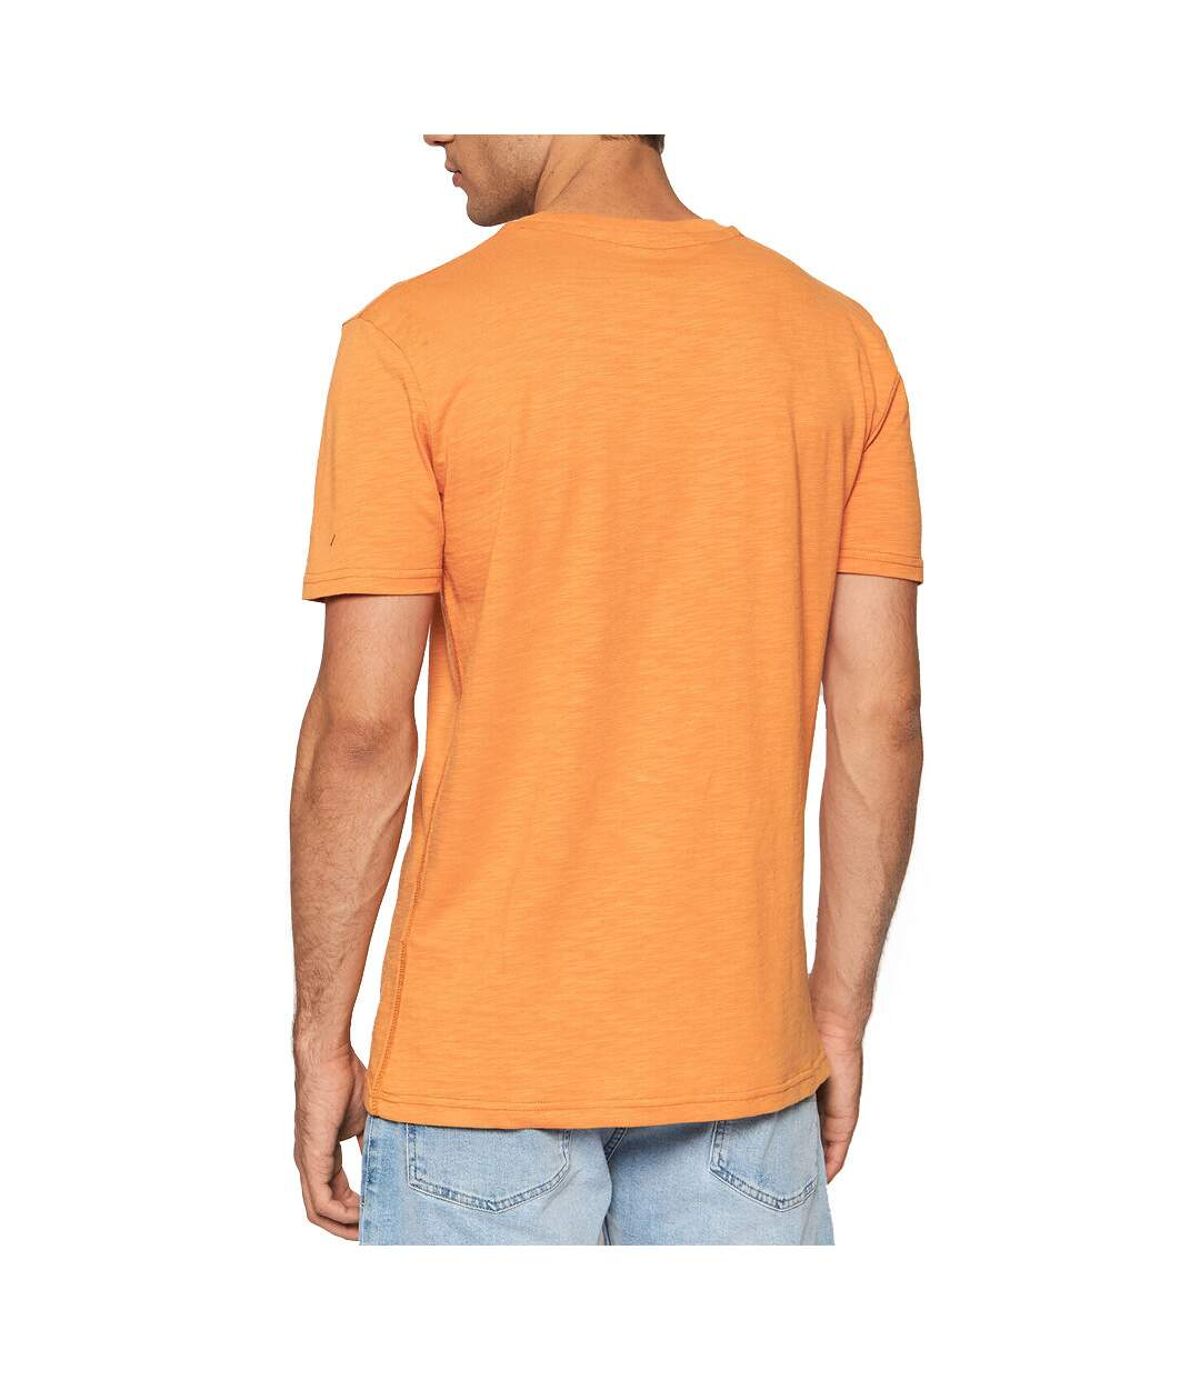 T-shirt Orange Homme Quiksilver Witton